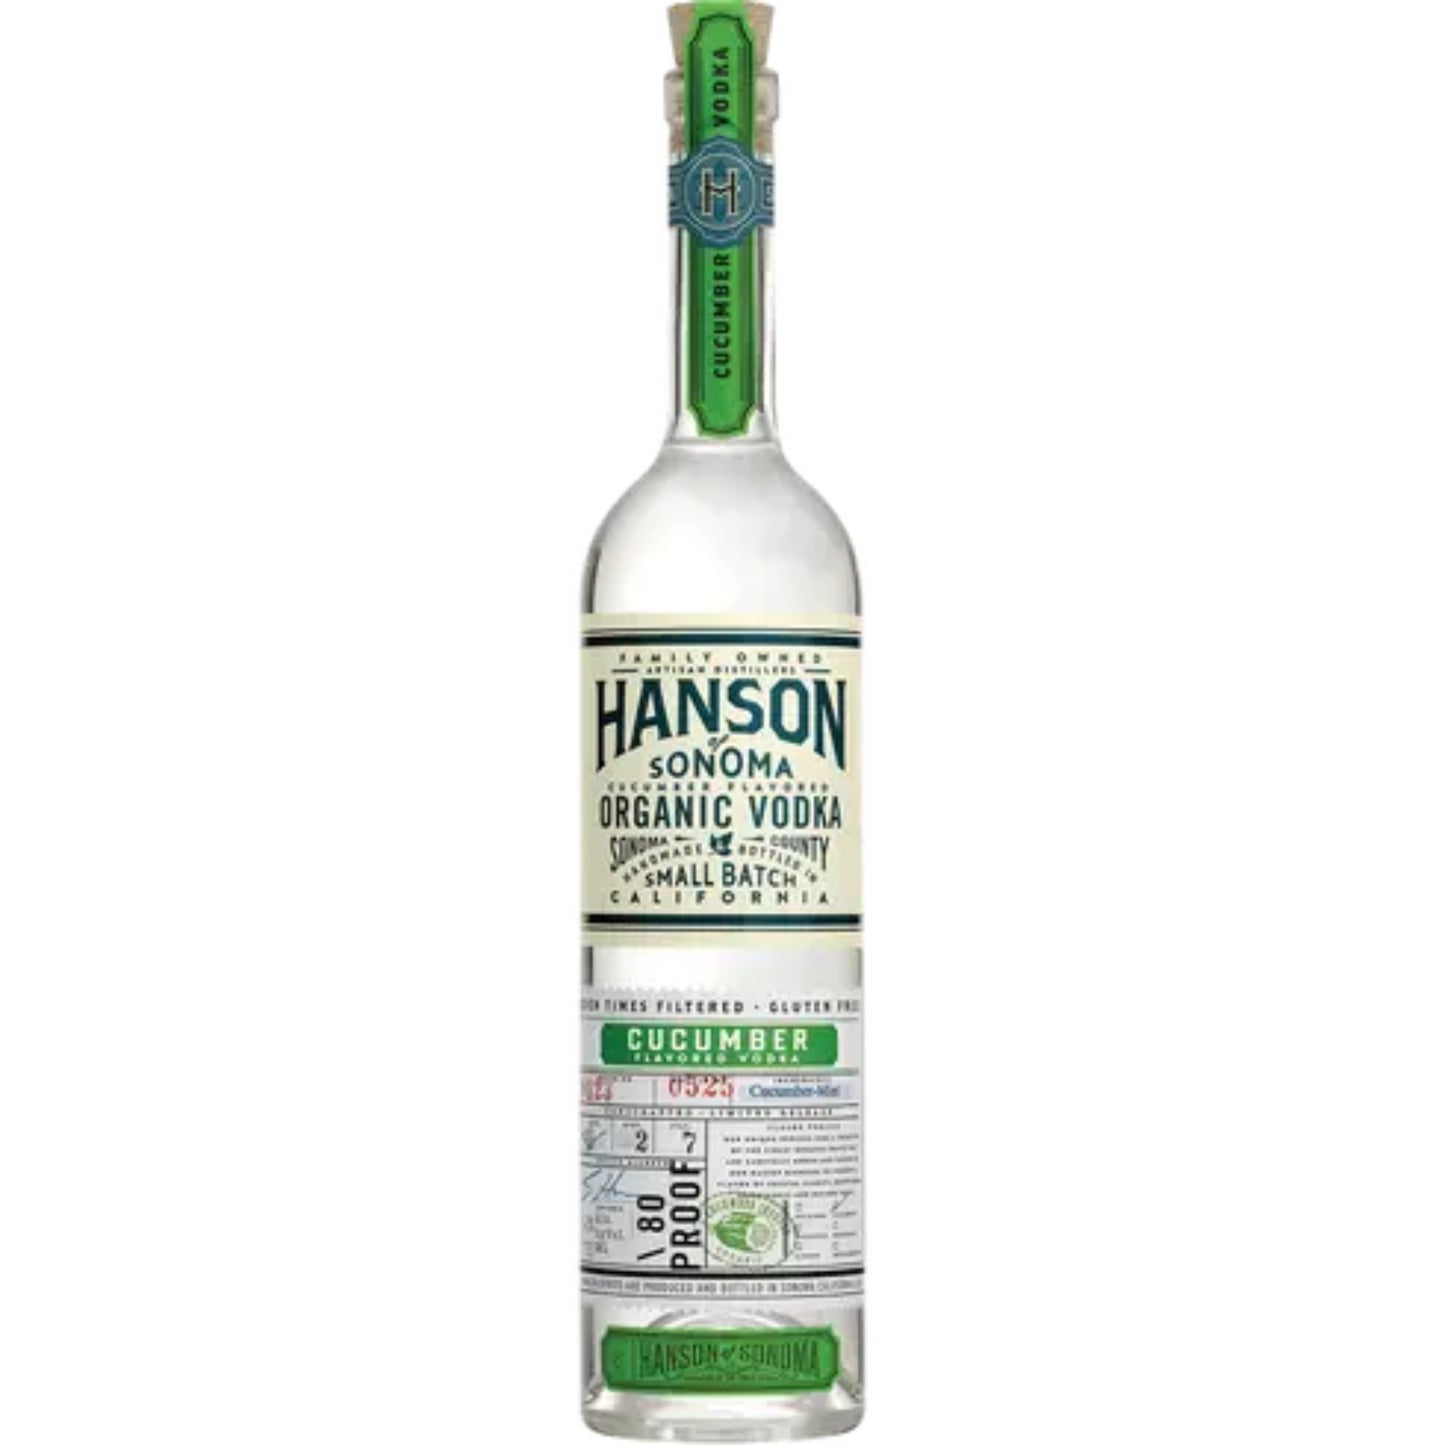 Hanson of Sonoma Cucumber Organic Vodka